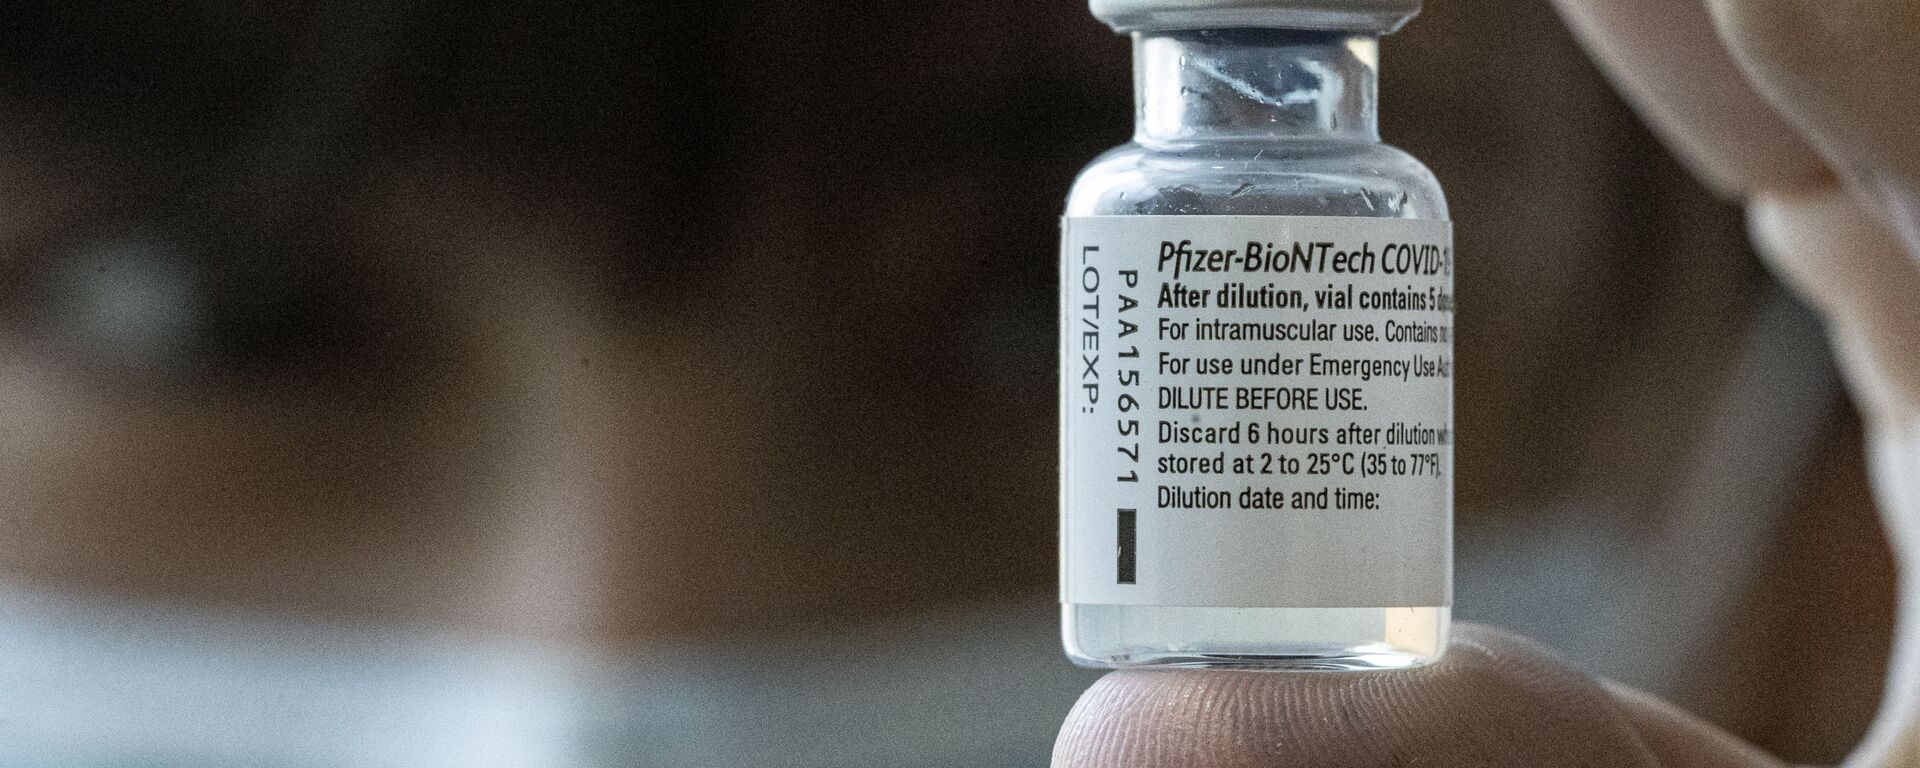 La vacuna Pfizer-BioNTech contra el COVID-19 - Sputnik Mundo, 1920, 04.02.2021